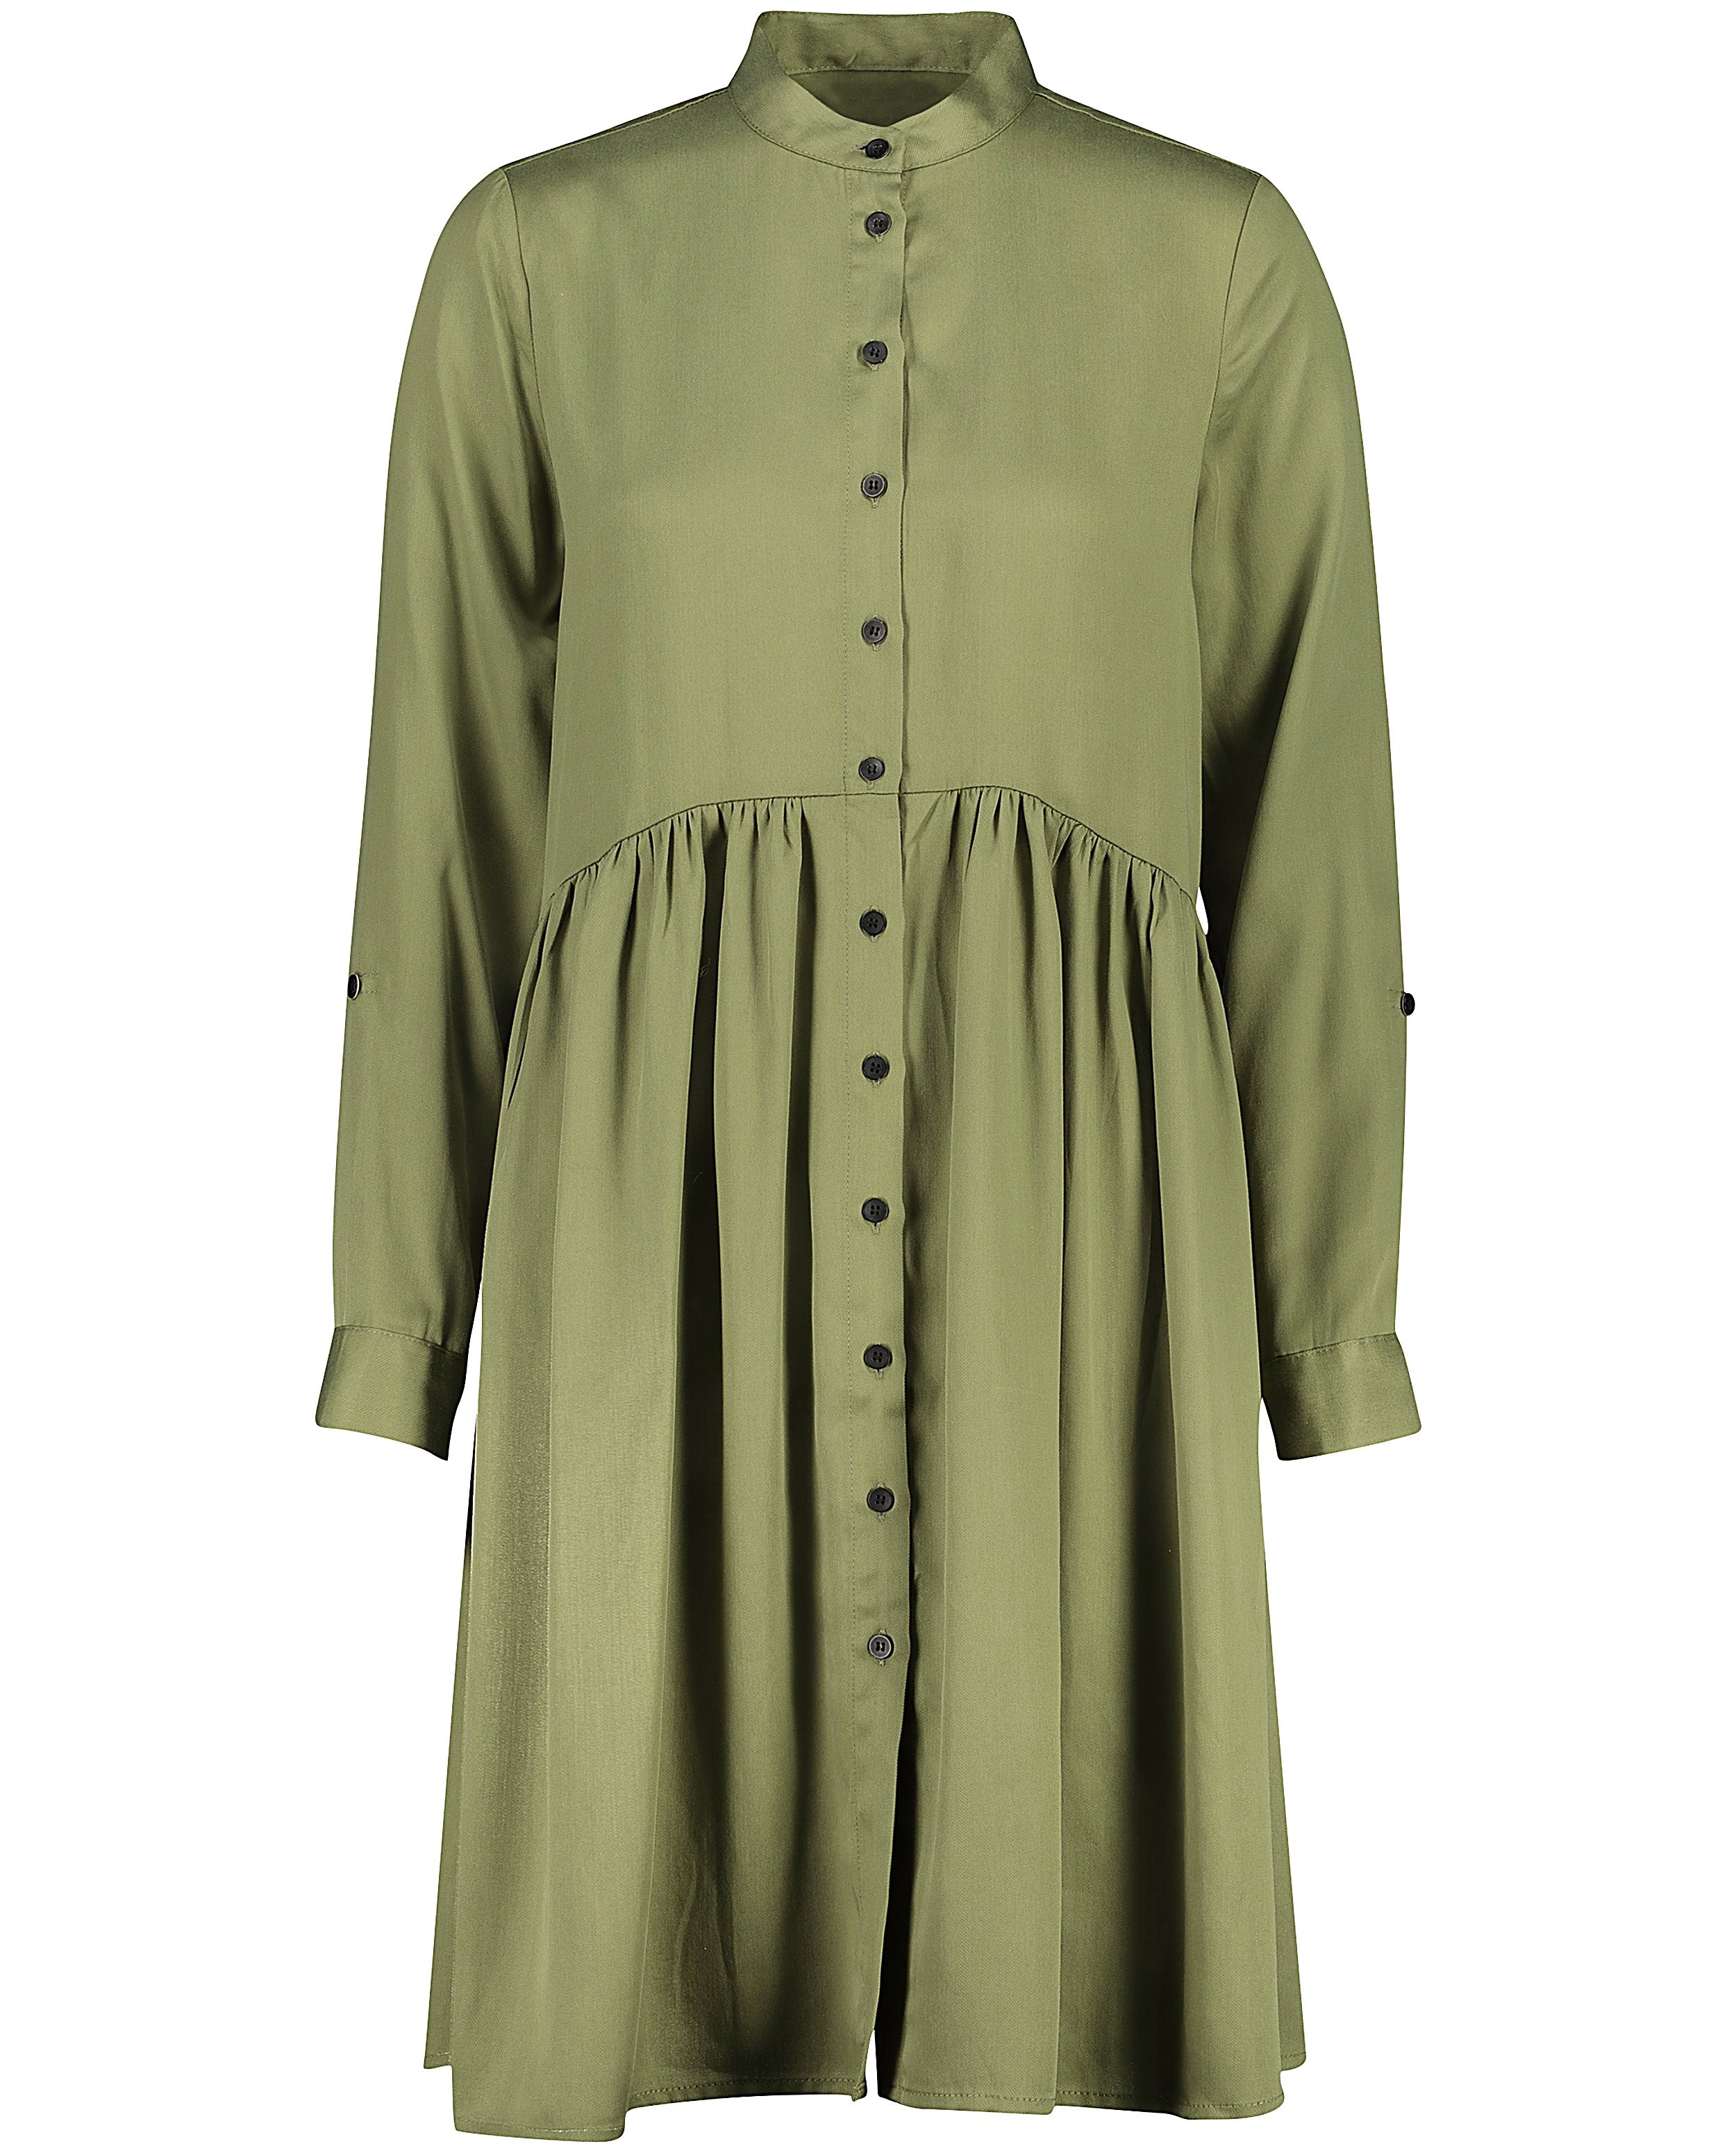 Kleedjes - Groene jurk van lyocell I AM